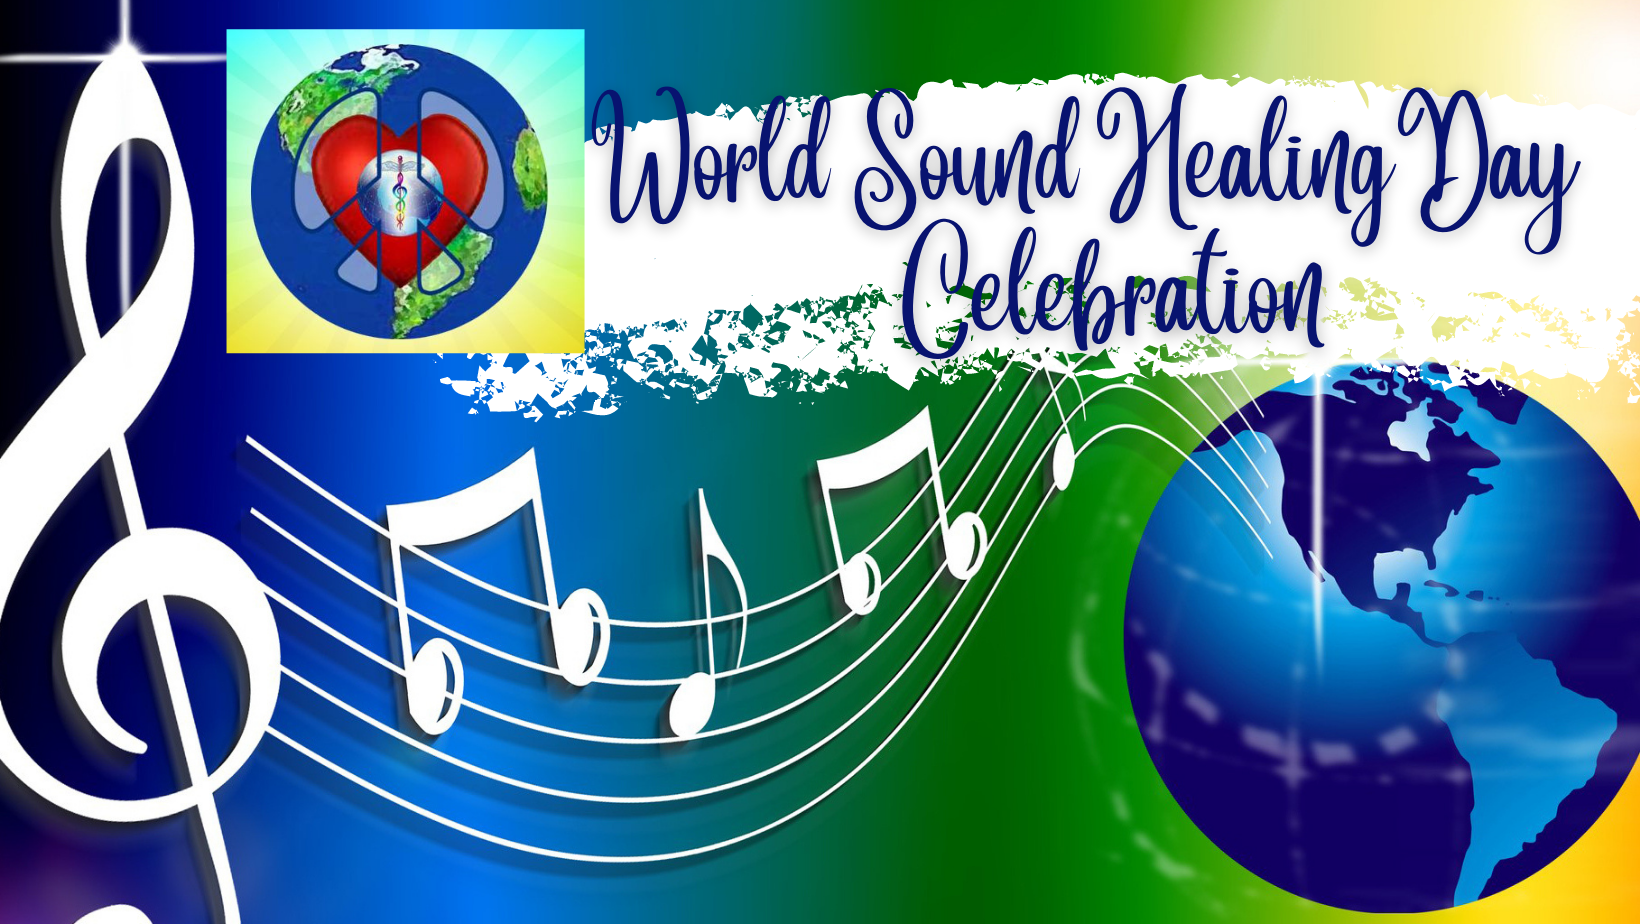 World Sound Healing Day Celebration